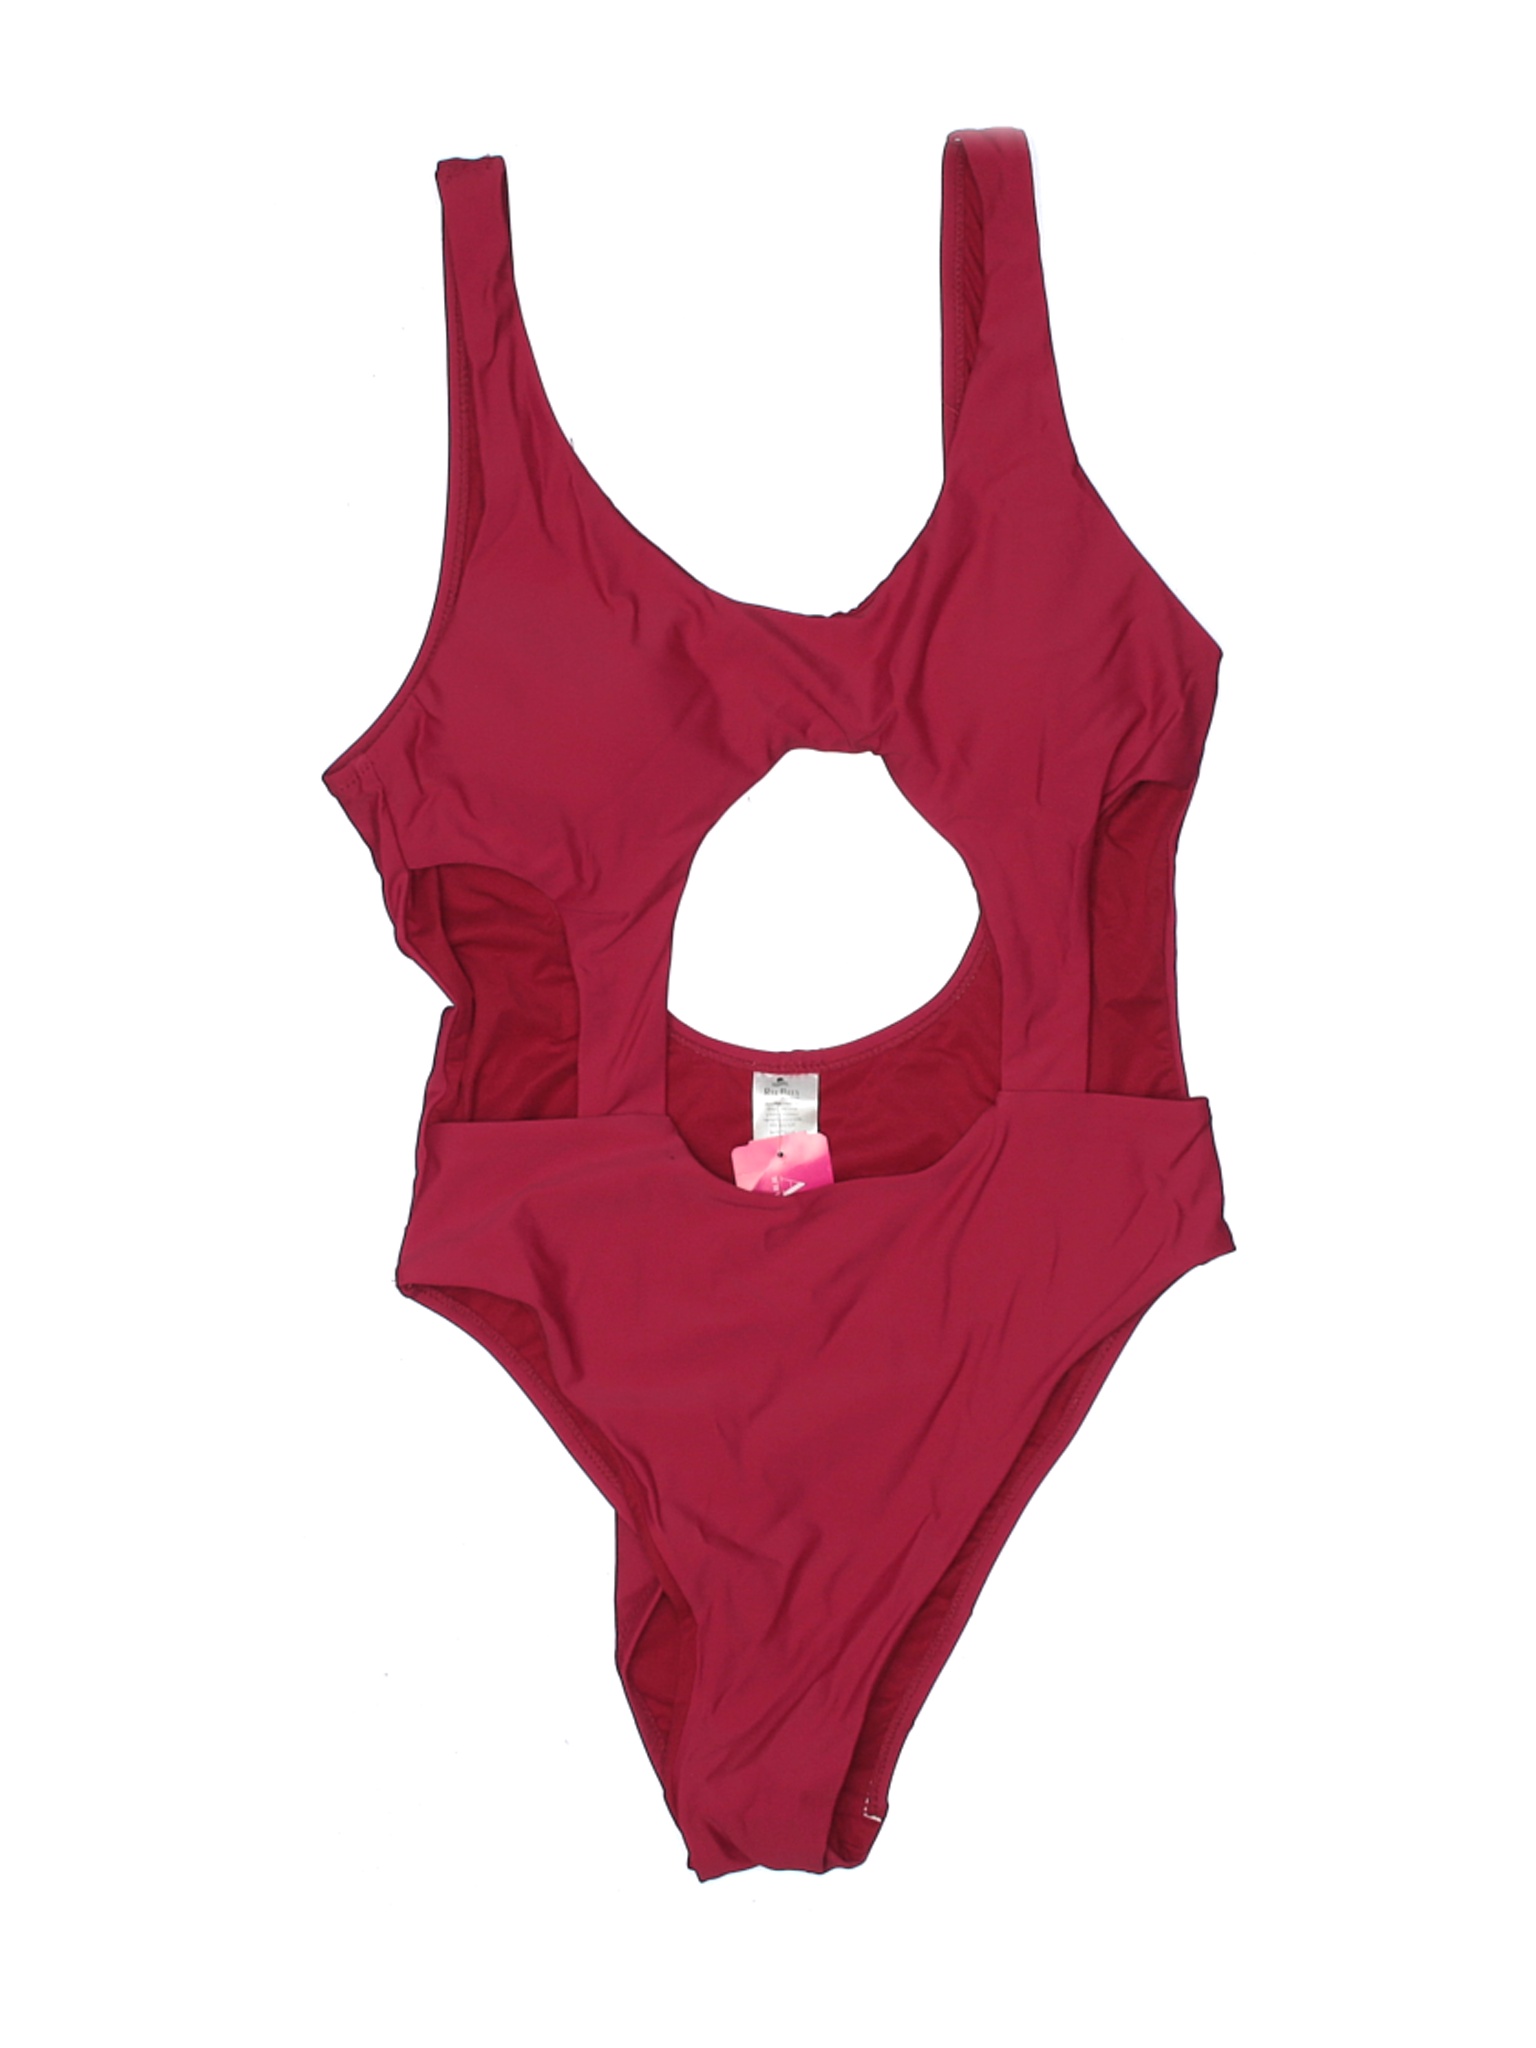 NWT Ree Bees Swimwear Women Red One Piece Swimsuit M | eBay